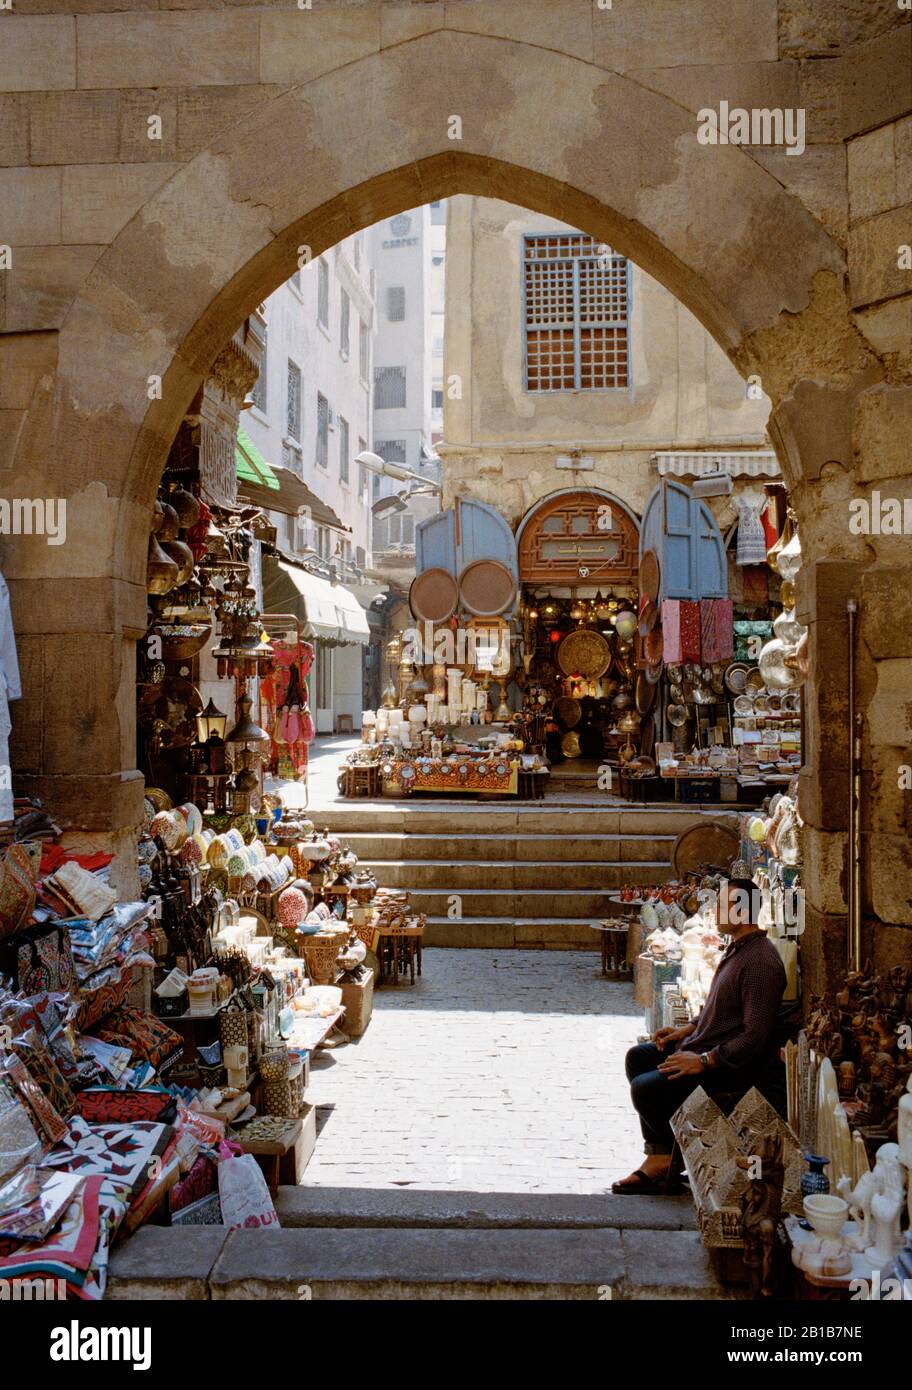 Touristenmarktbasar im Khan Al-Khalili im islamischen Kairo in Kairo in Ägypten in Nordafrika. Khalil El Wanderust Eskapismus Stockfoto